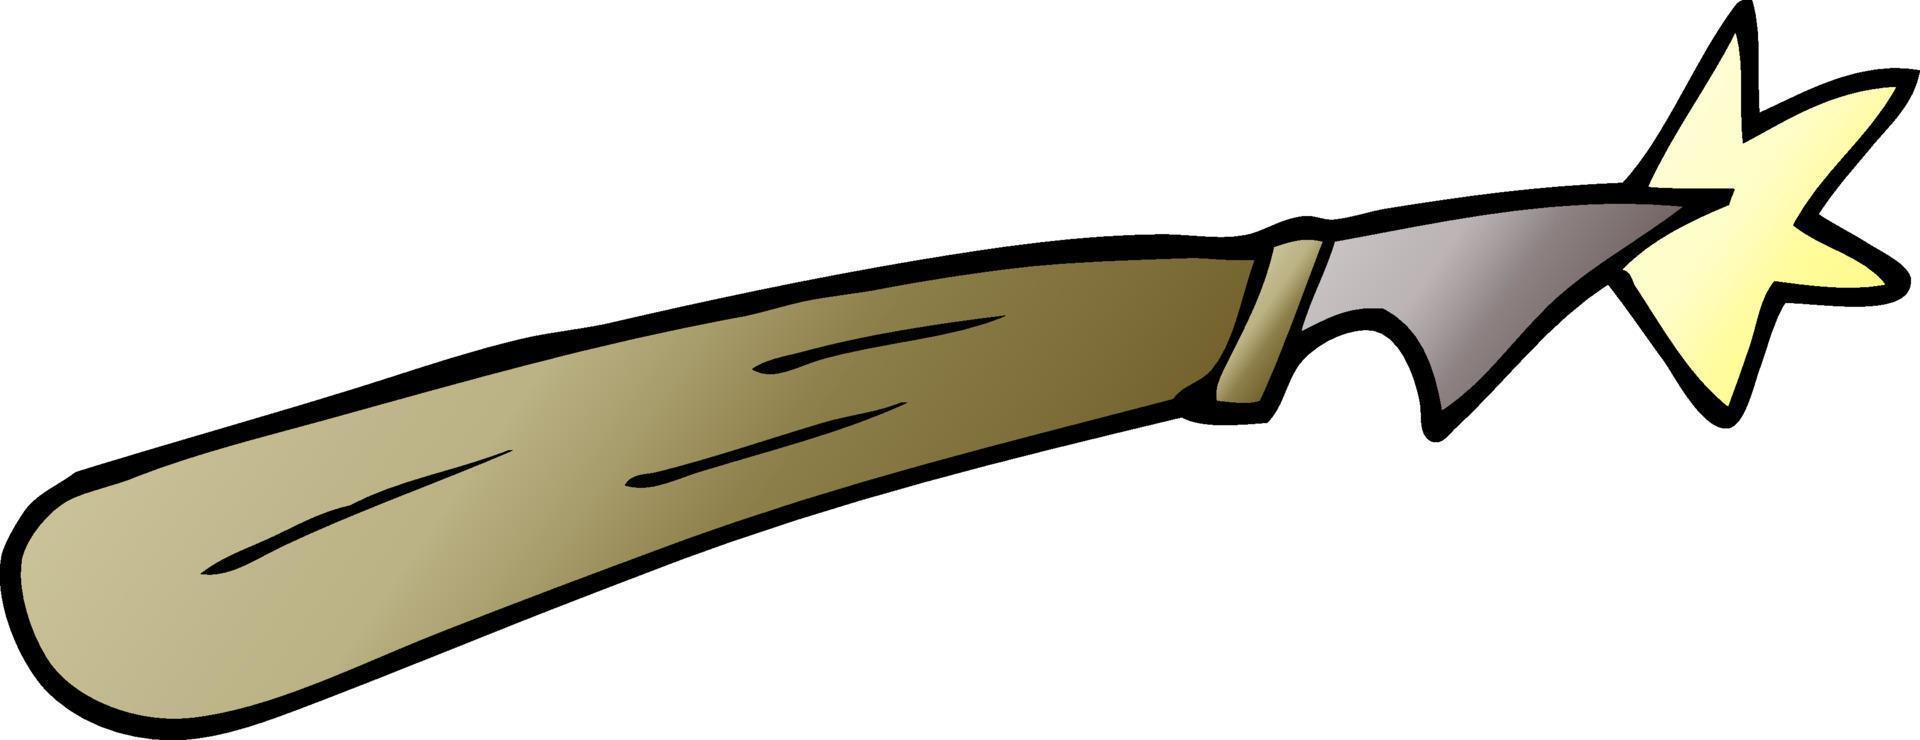 cartoon doodle craft knife vector